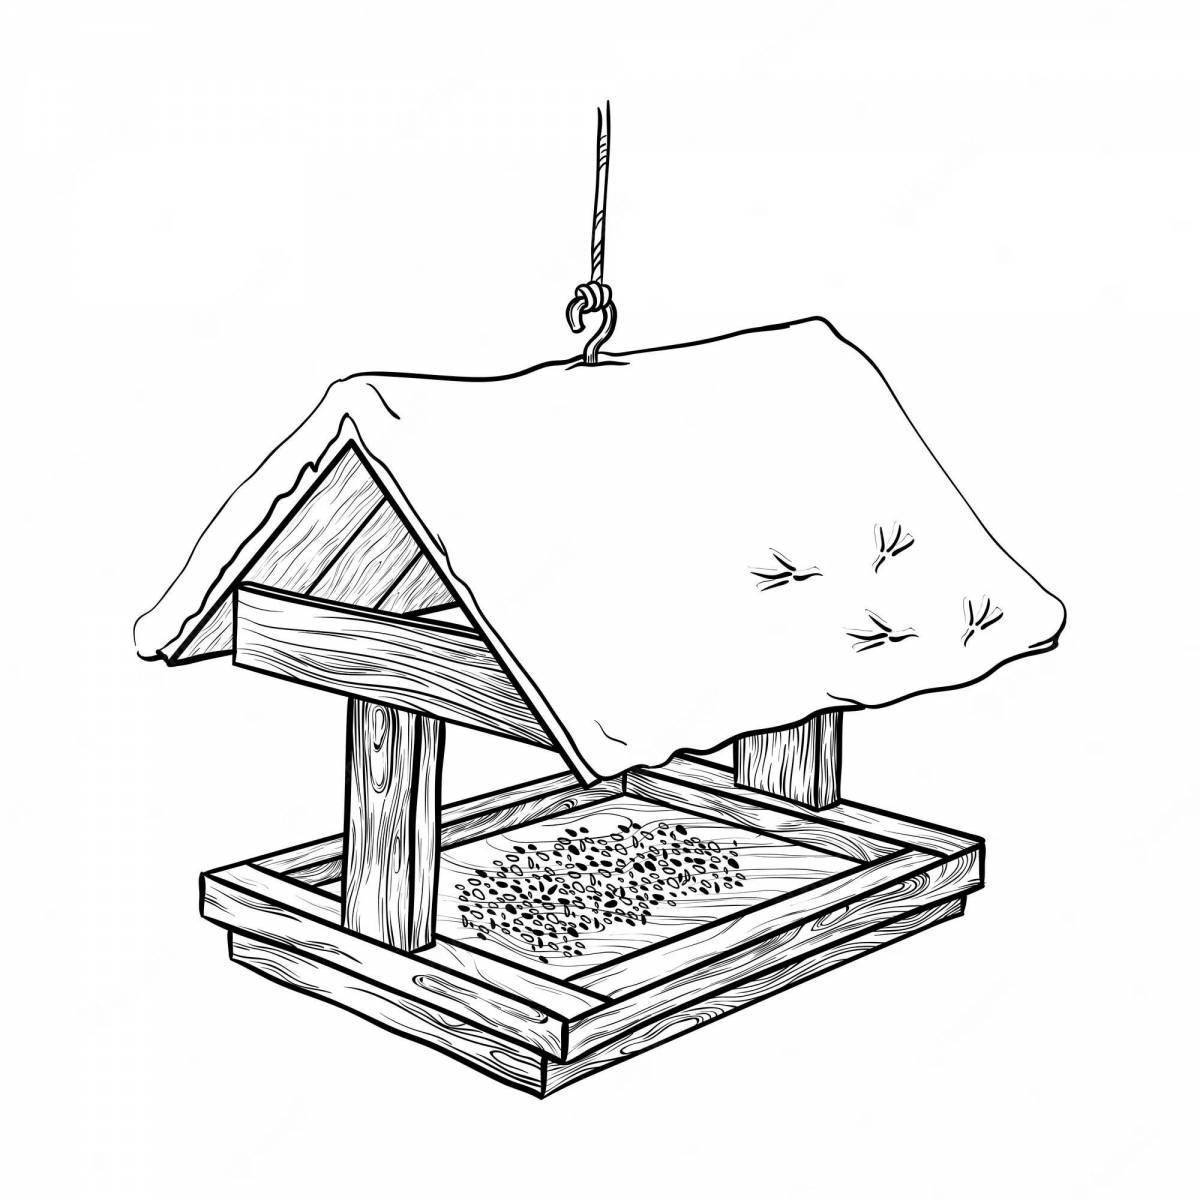 Картинка кормушка для птиц зимой для детей 6-7 лет